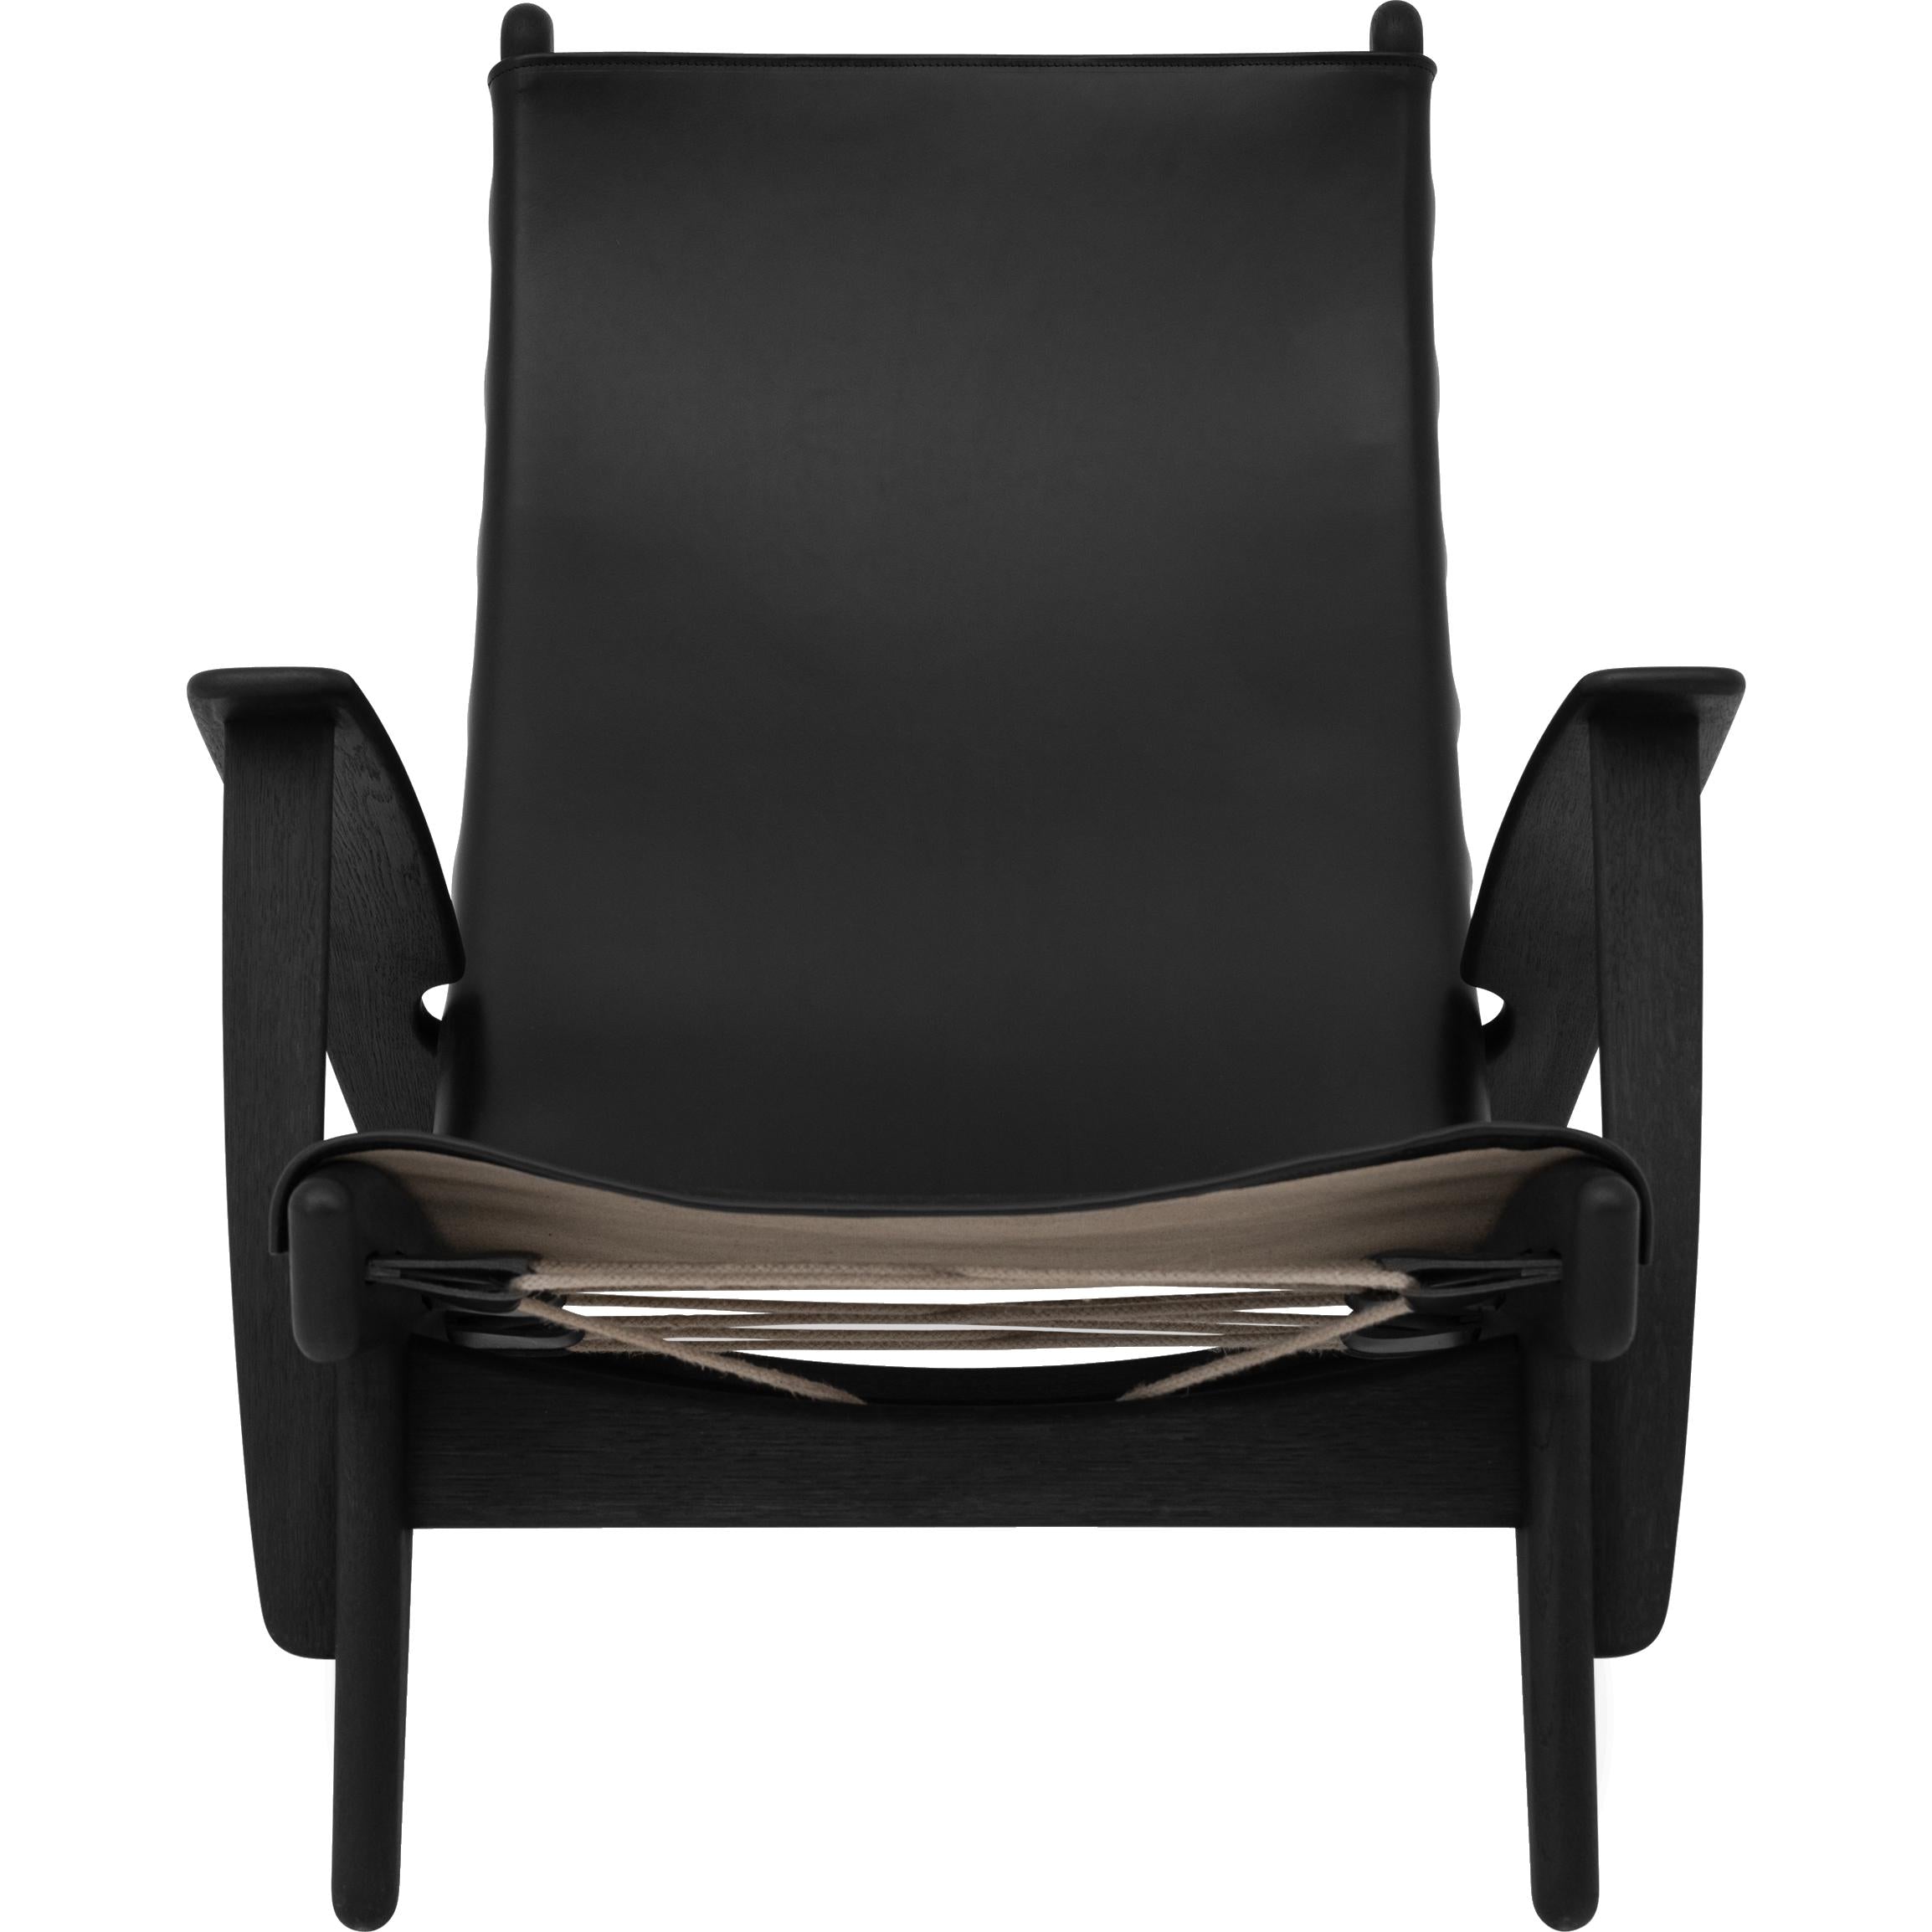 Klassik Studio Pv King's Chair Black Oak Stained, Black Leather